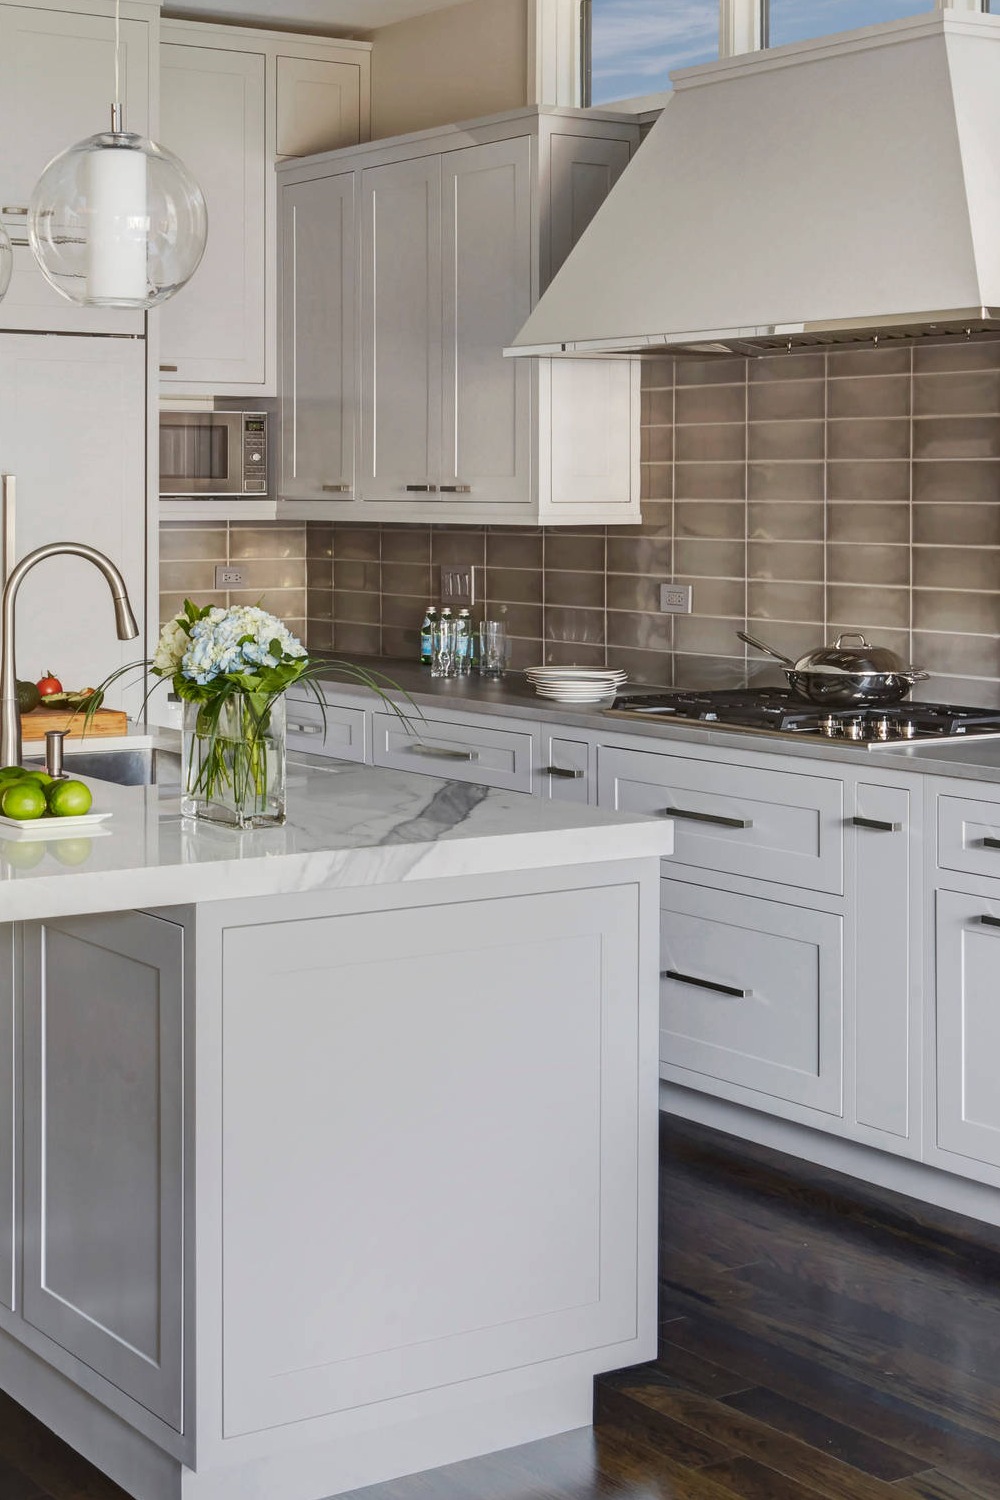 Kitchen Backsplash Tile Backsplash White Cabinets Pendant Lights Dark Floors Kitchen Design Quartz Counters